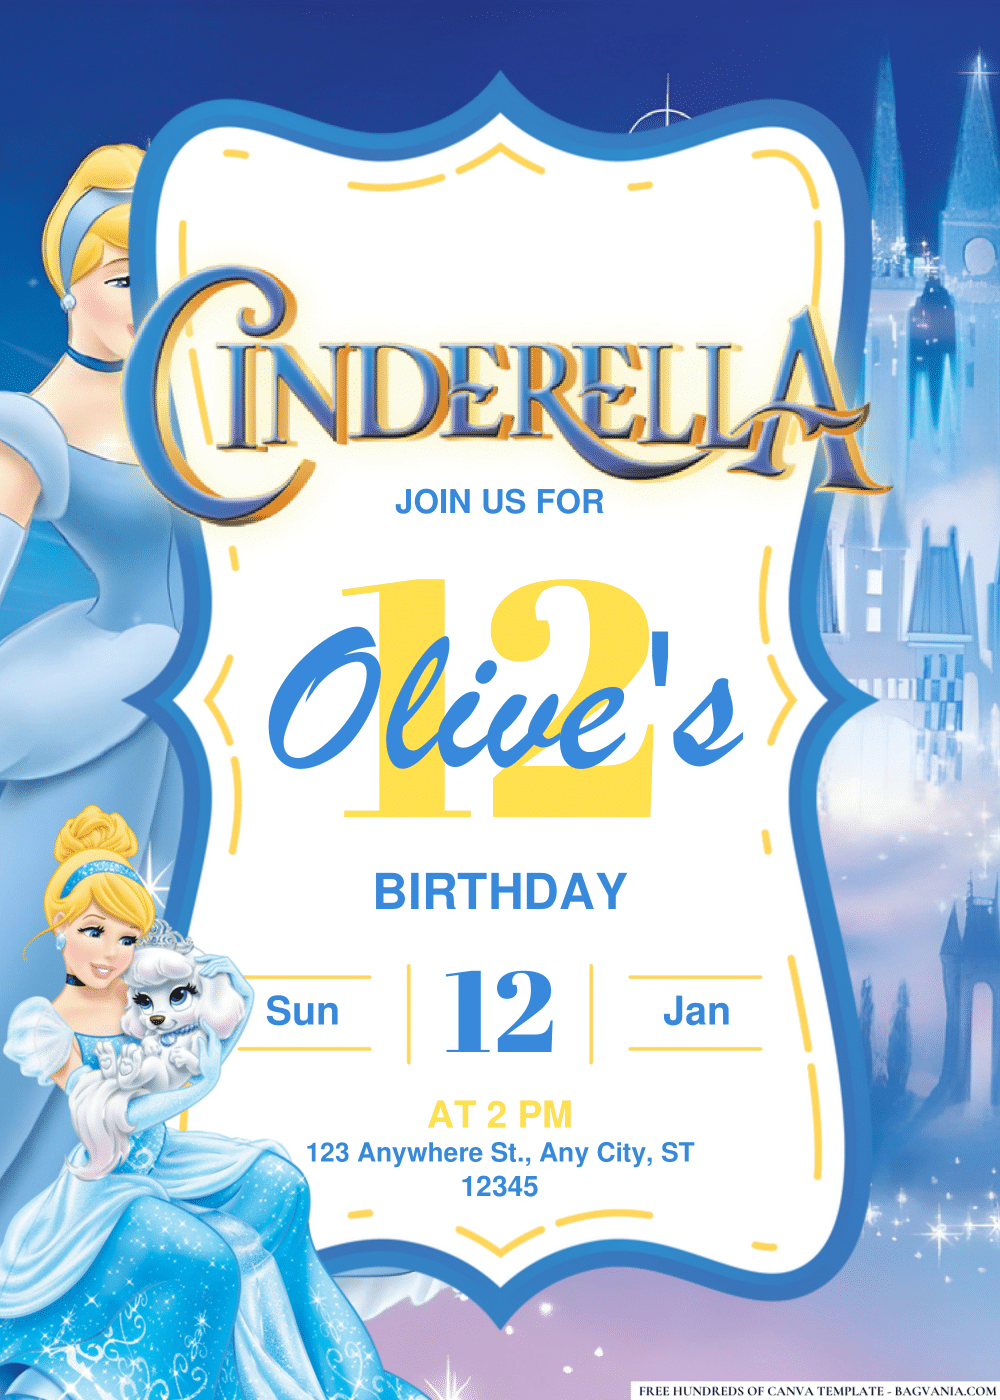 FREE Editable PDF Cinderella Birthday Invitations